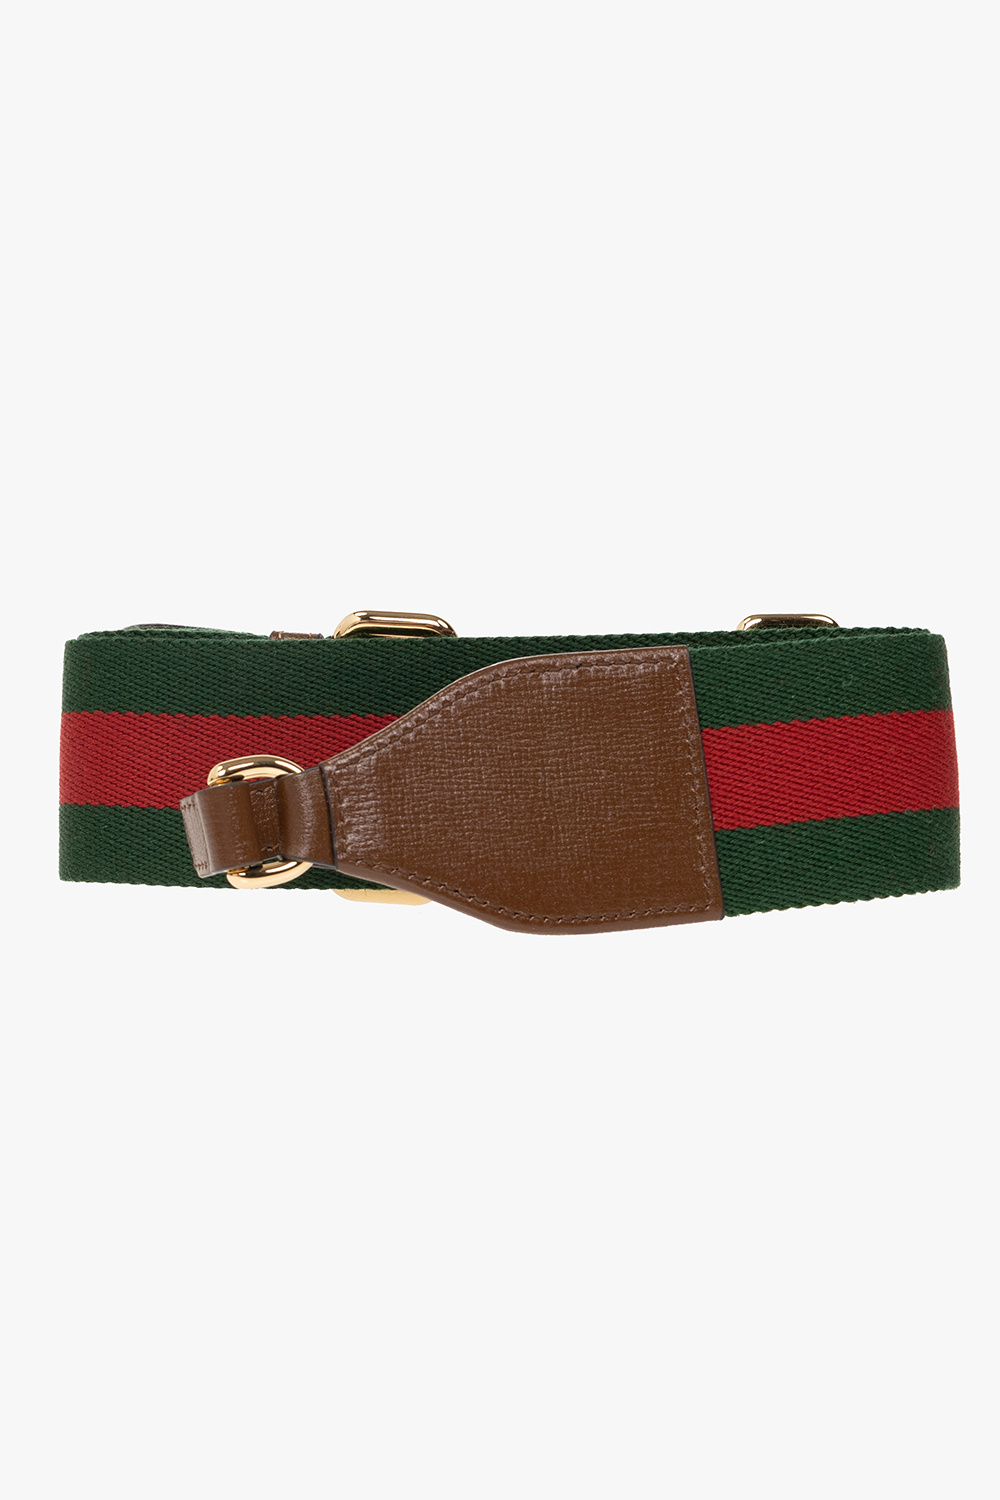 gucci beanie ‘Horsebit 1955 Mini’ shoulder bag